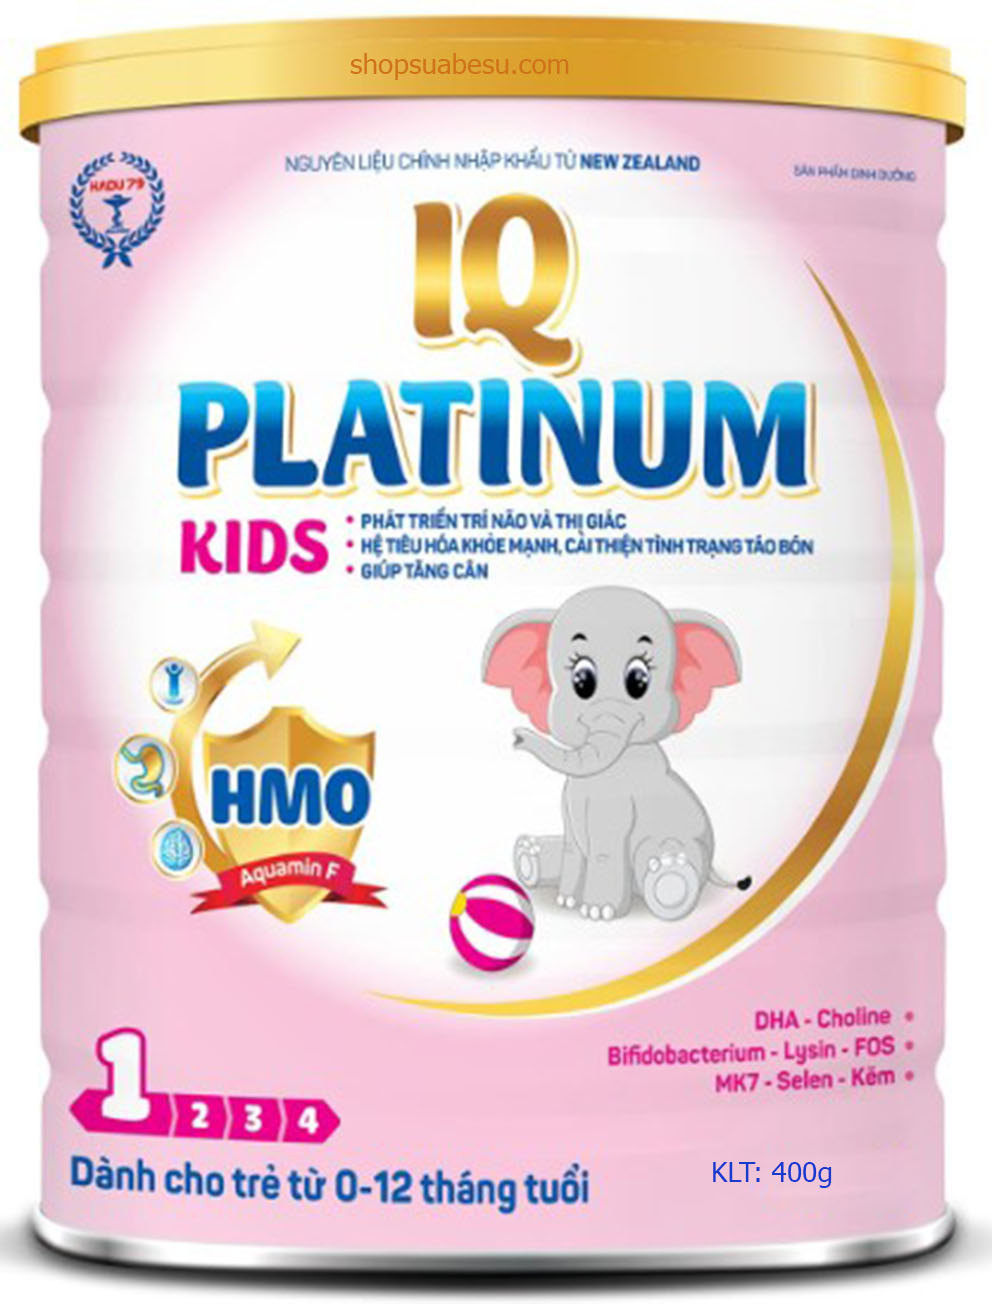 Sữa IQ PLATINUM KID 400g